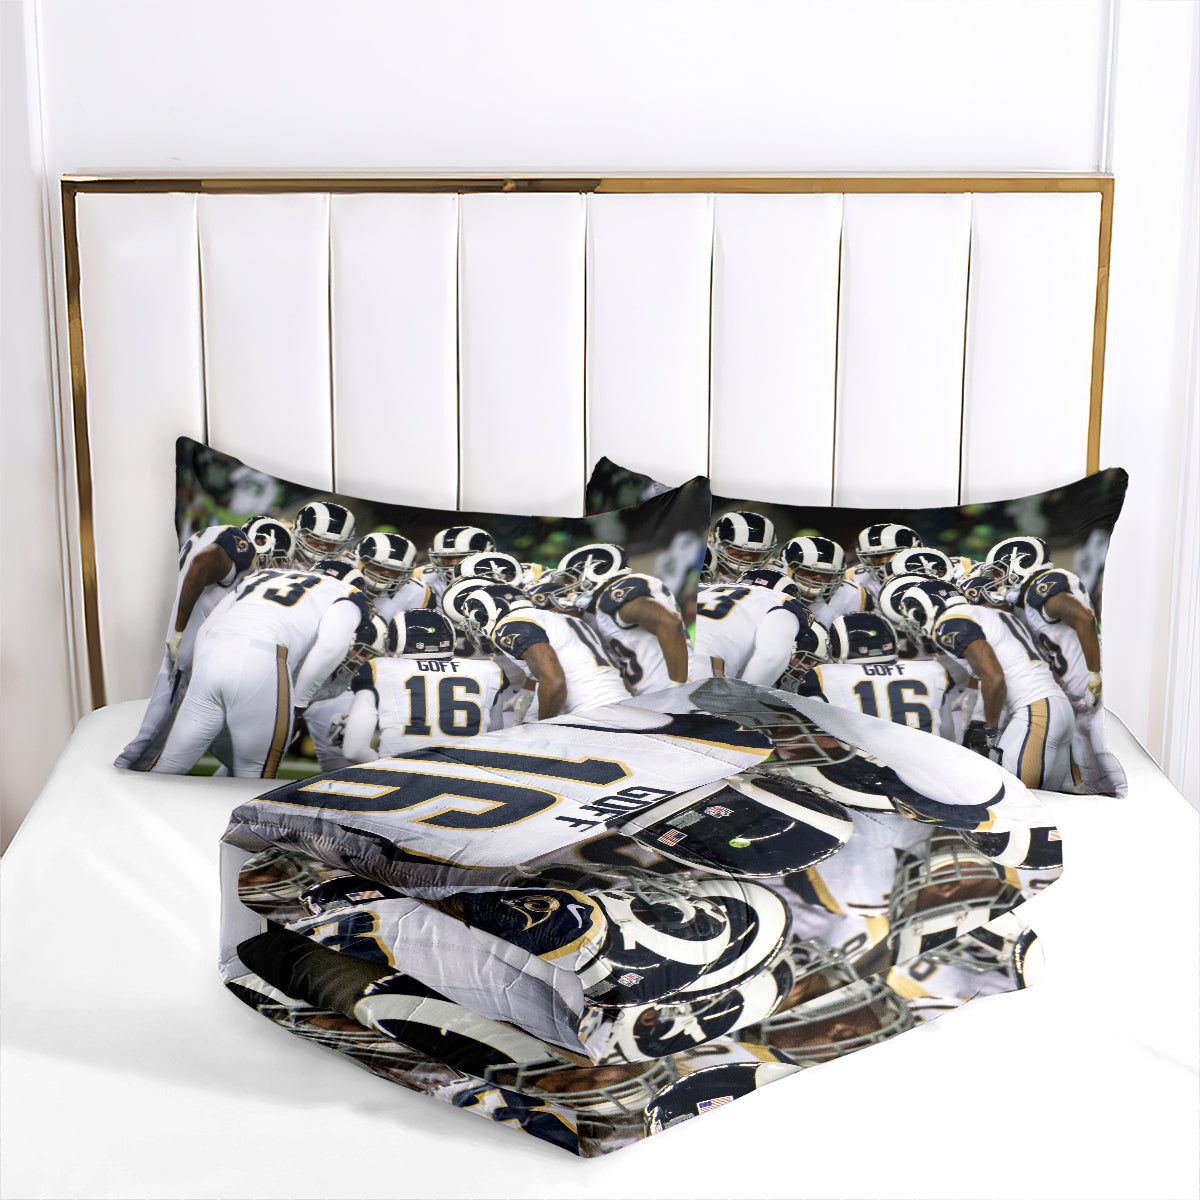 Los Angeles Rams Football Team Comforter Pillowcase Sets Blanket All Season Reversible Quilted Duvet